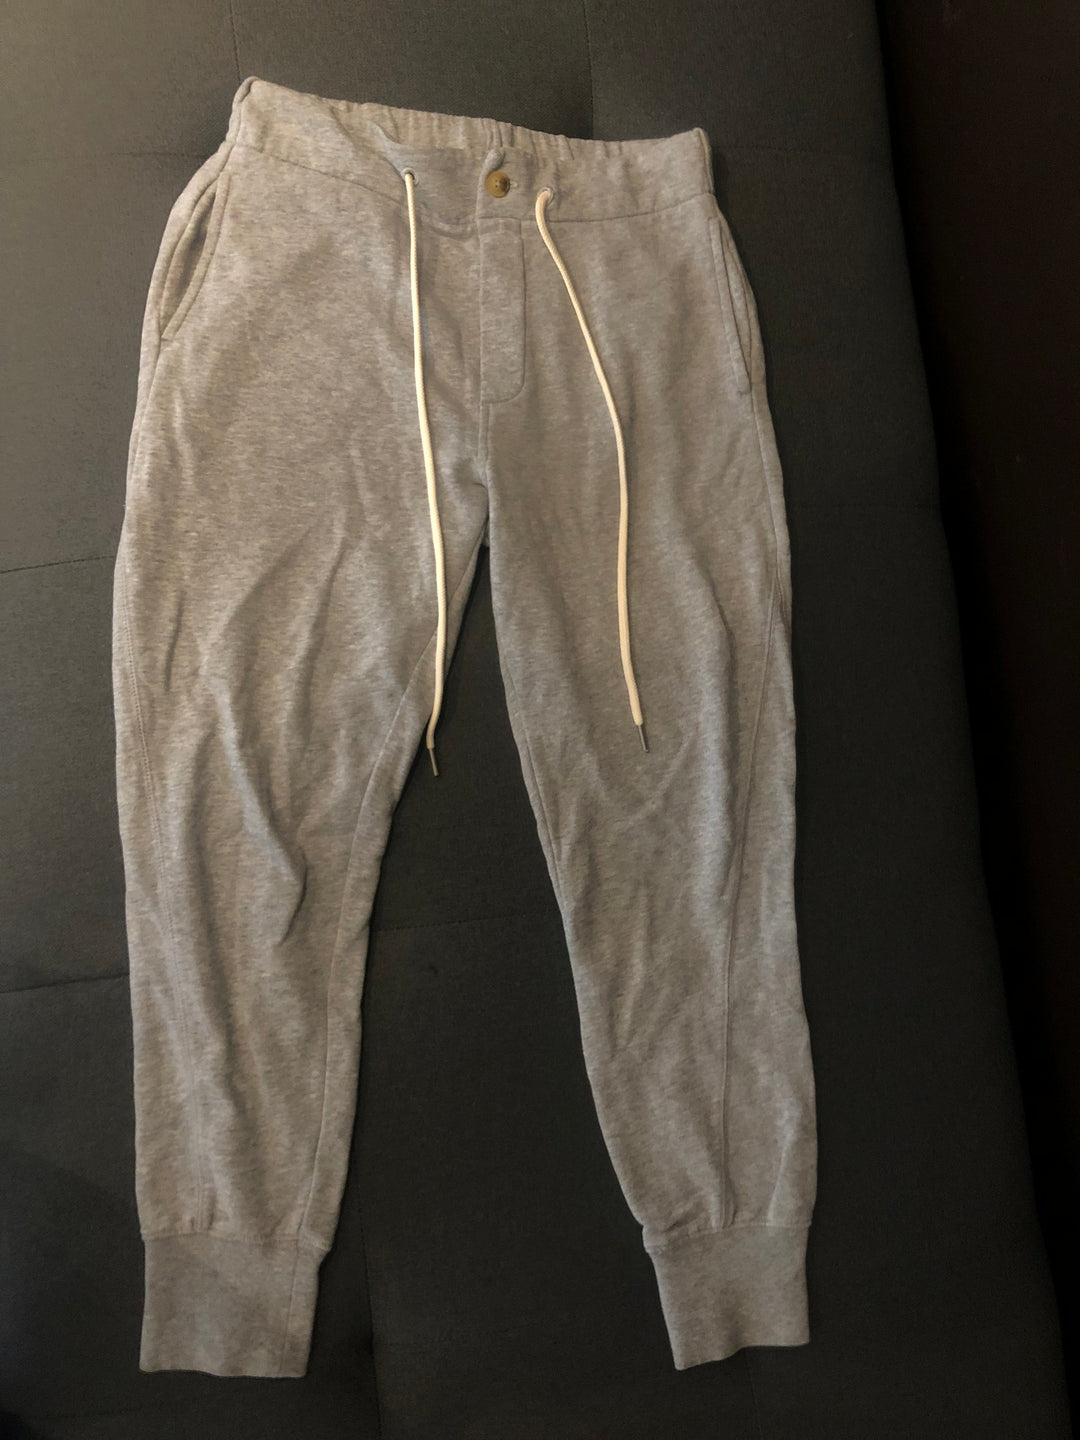 Image of Grey Sweatpants